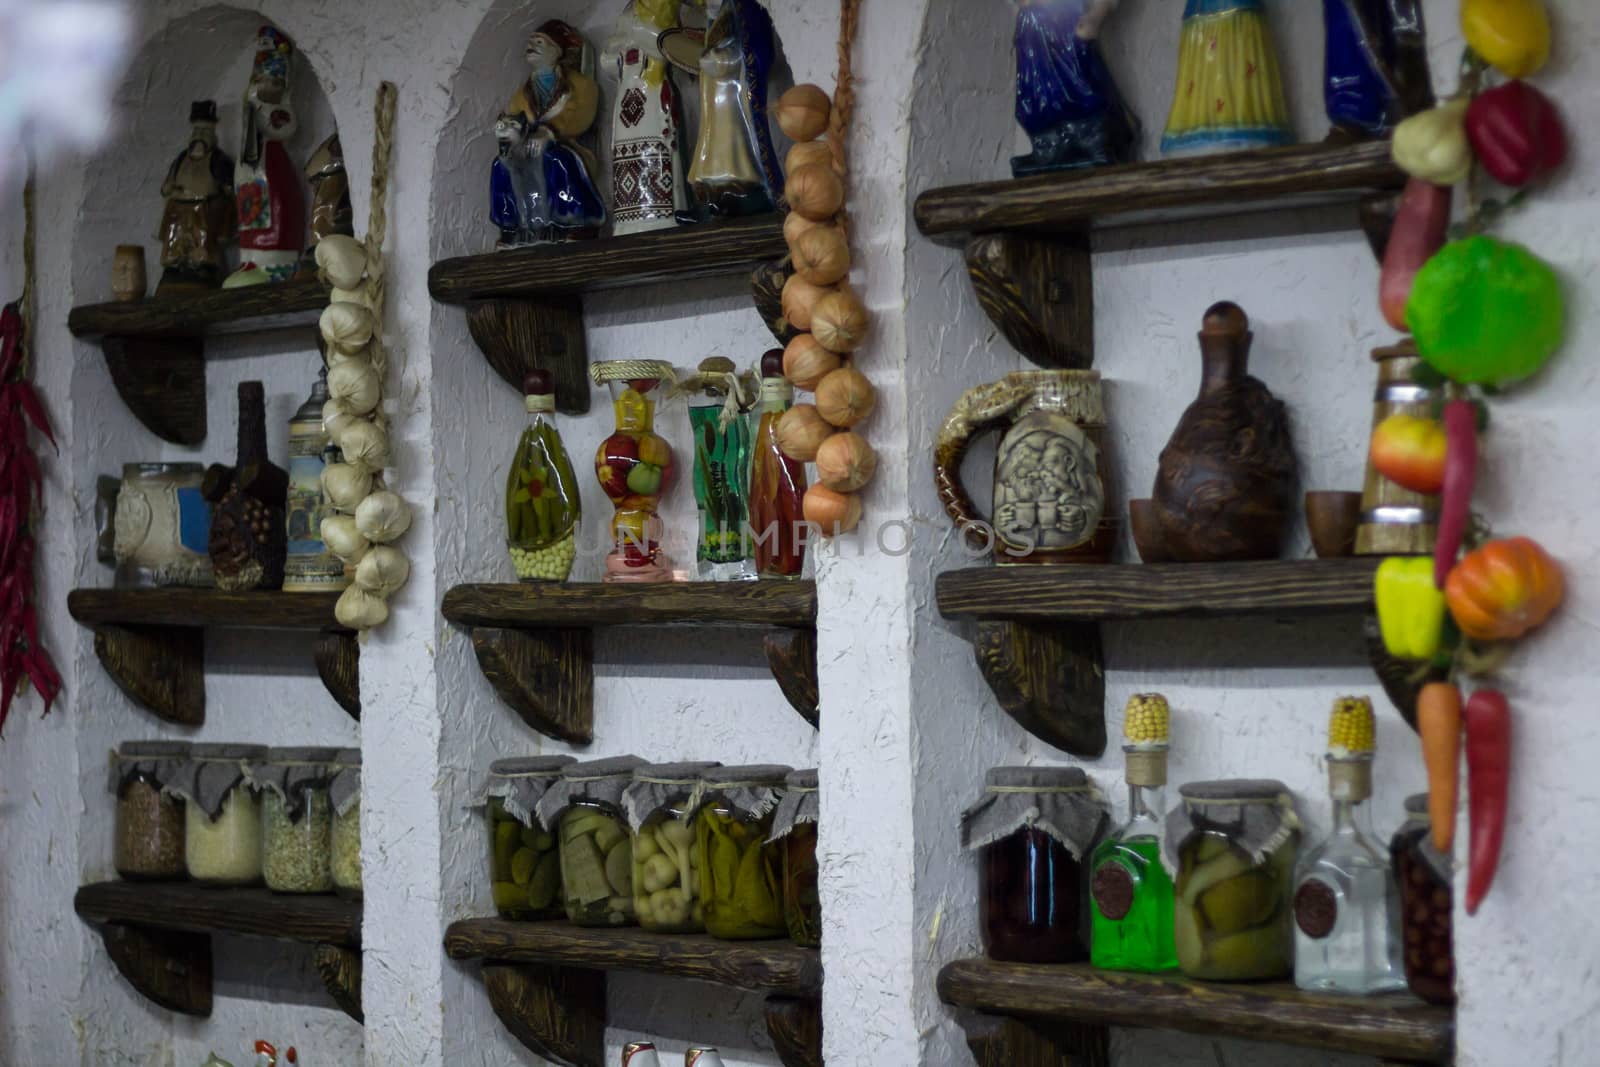 Ukrainian rural country style kitchen with village interior decoration accessories